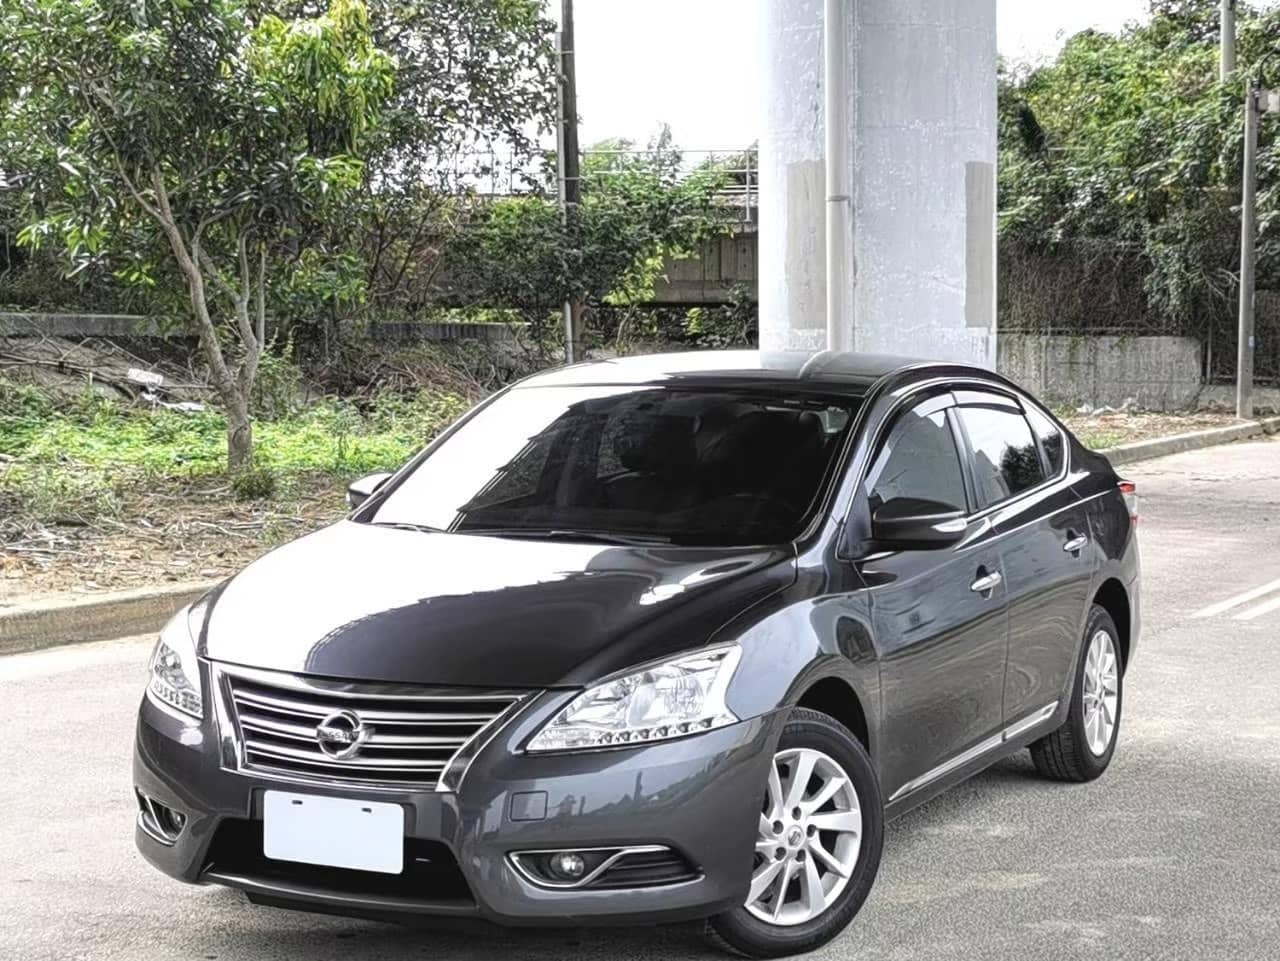 Nissan_usedcar_2015_Sentra_1.8_160899km_Nissan中古車_Sentra_圖片 (1)